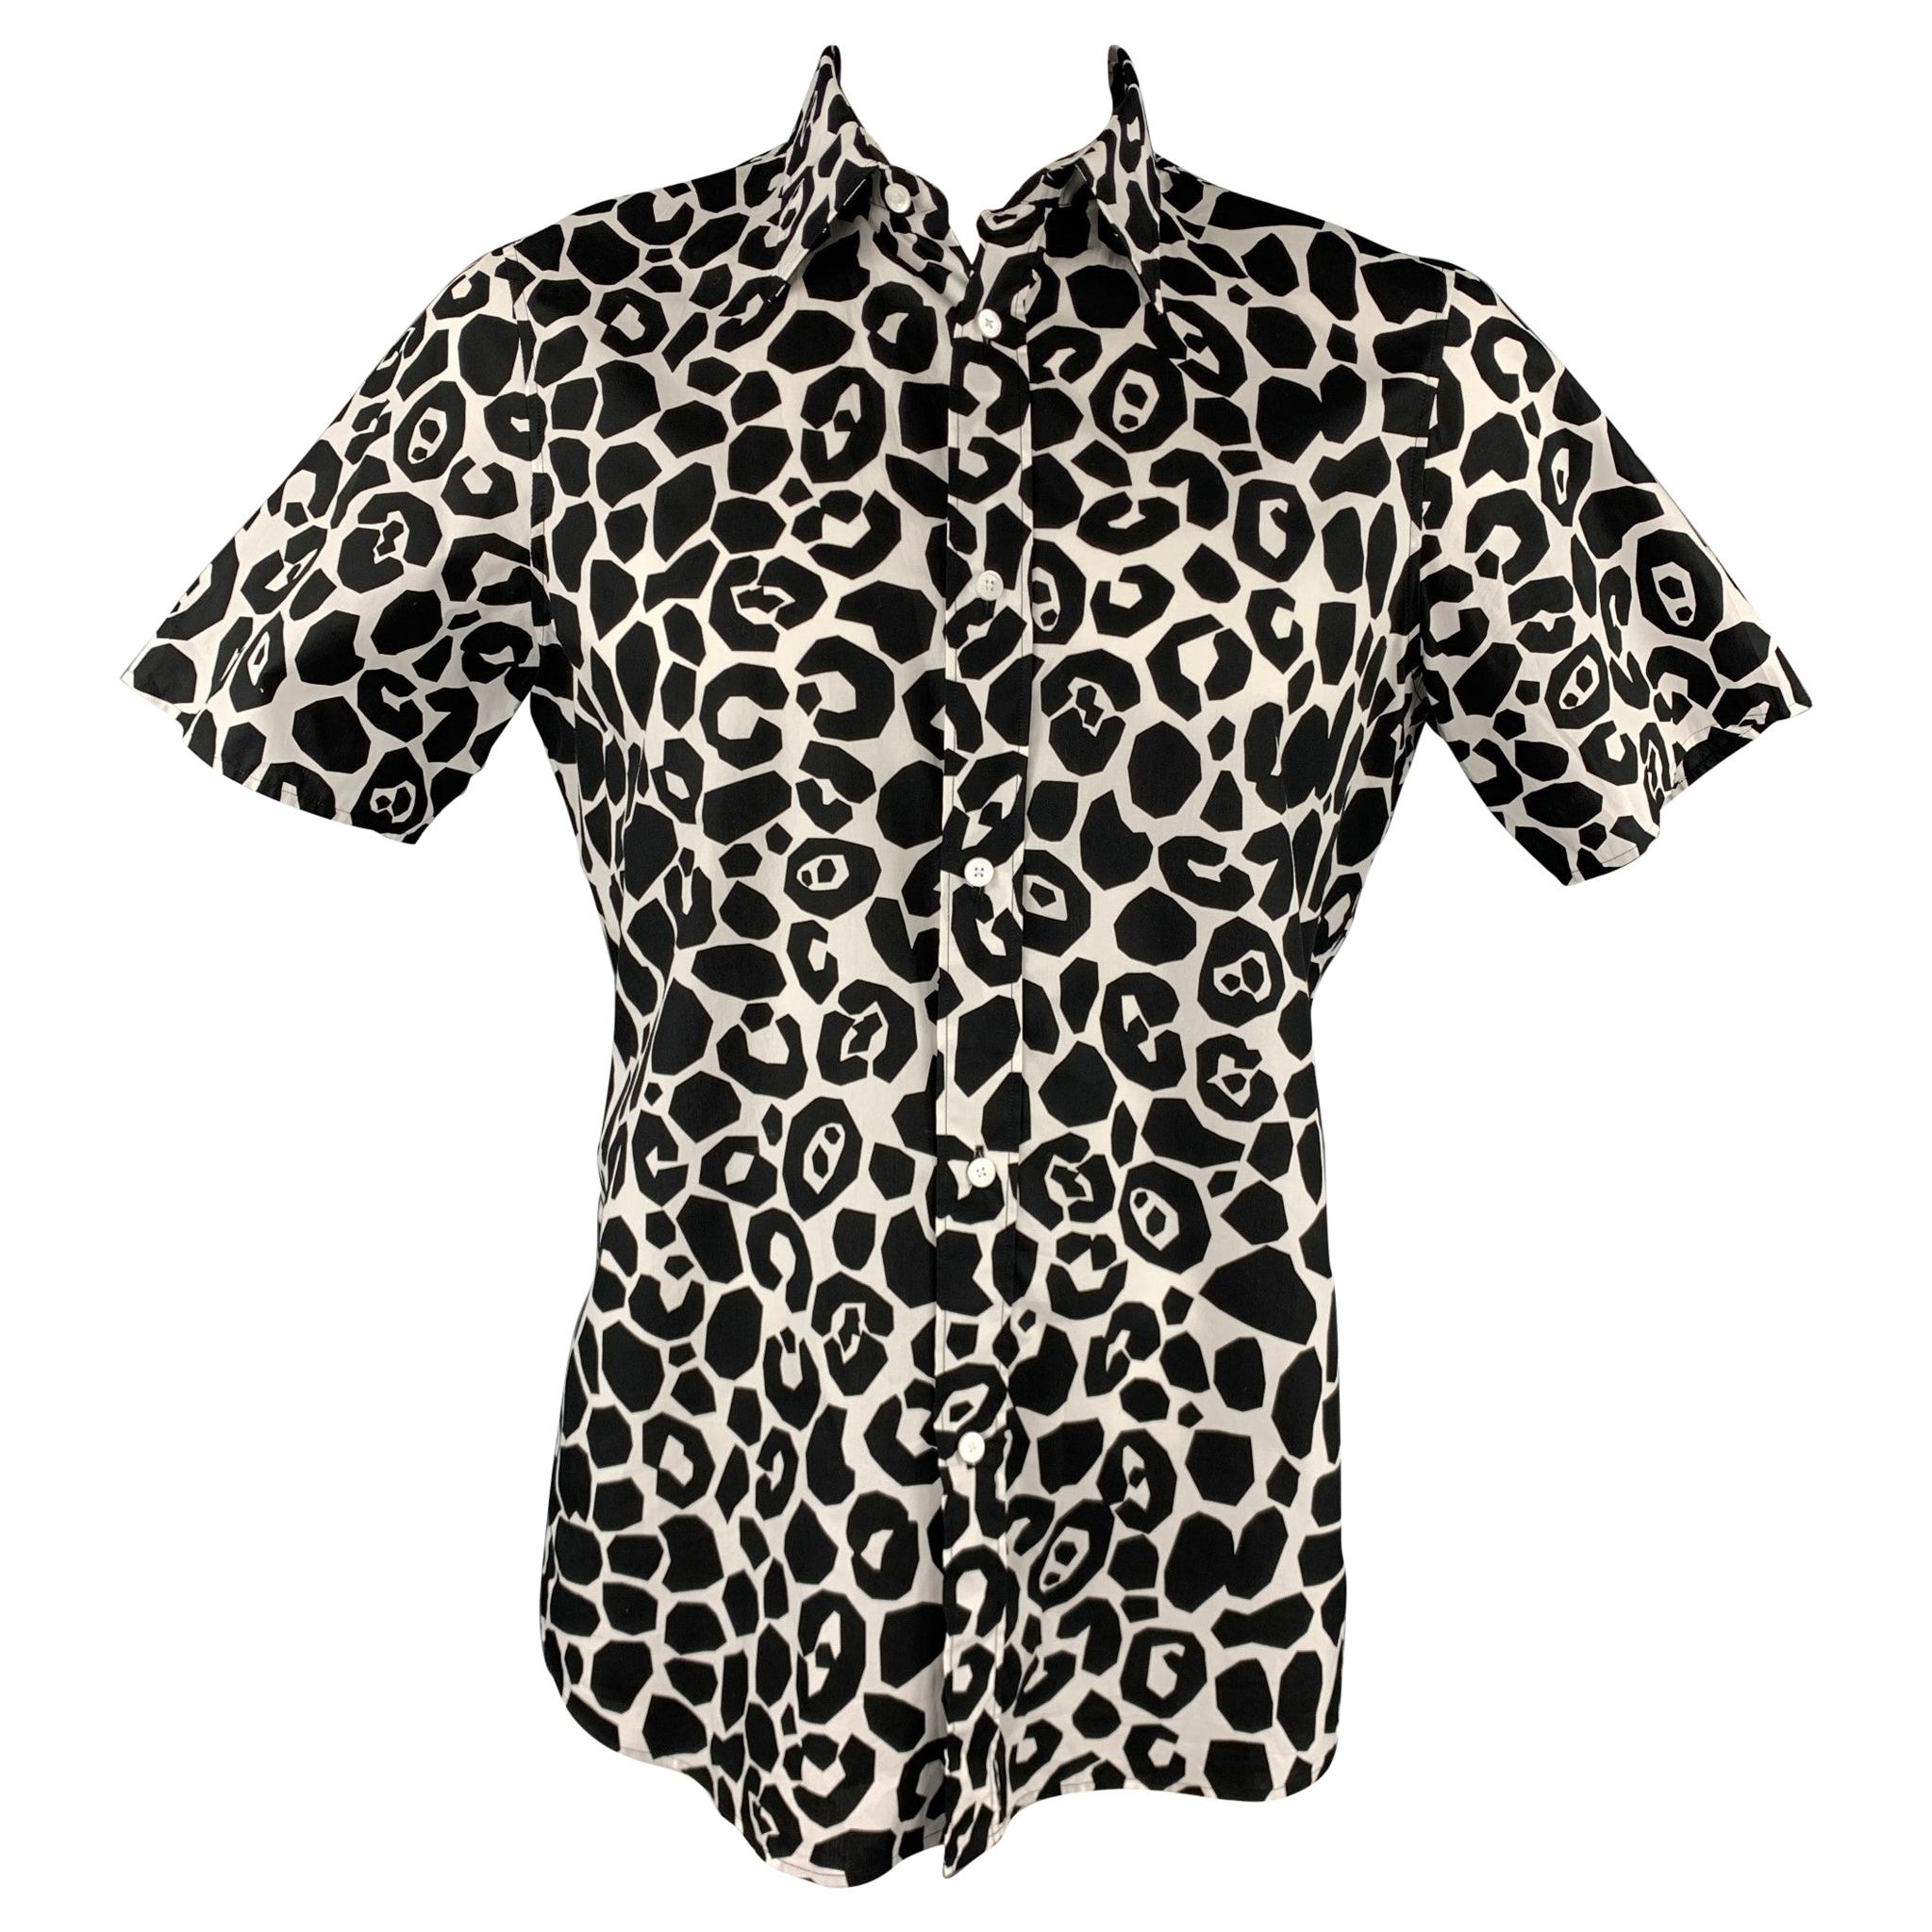 BURBERRY PRORSUM Size XL Black & White Giraffe Print Cotton Shirt 